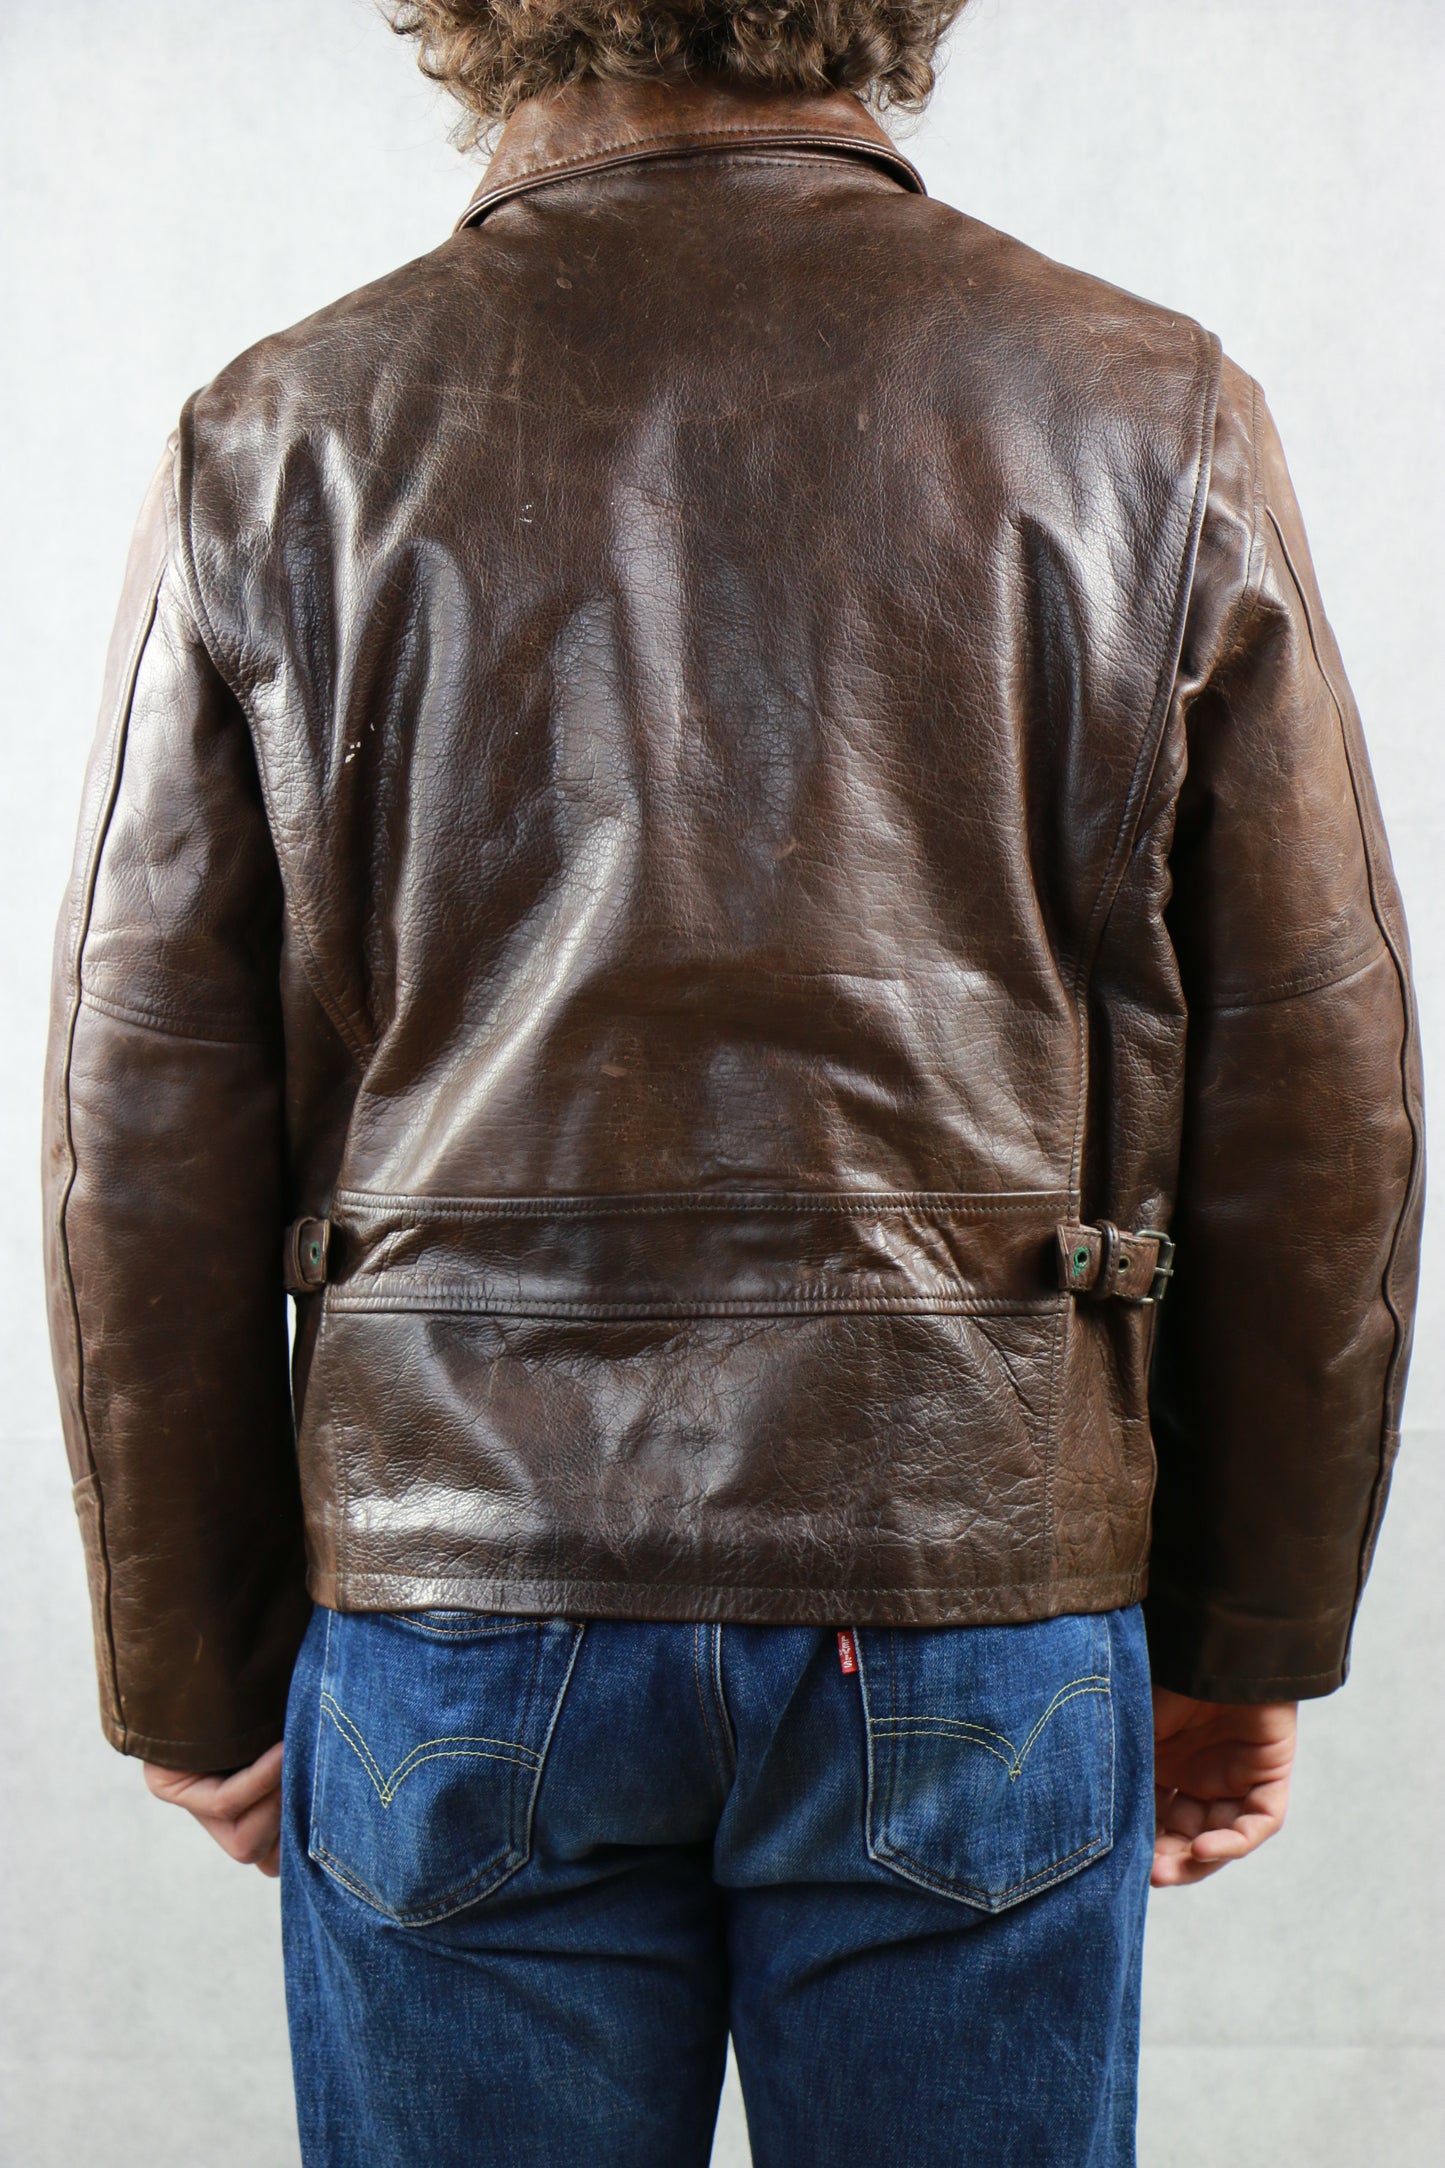 WhitcomB Leather Jacket, clochard92.com